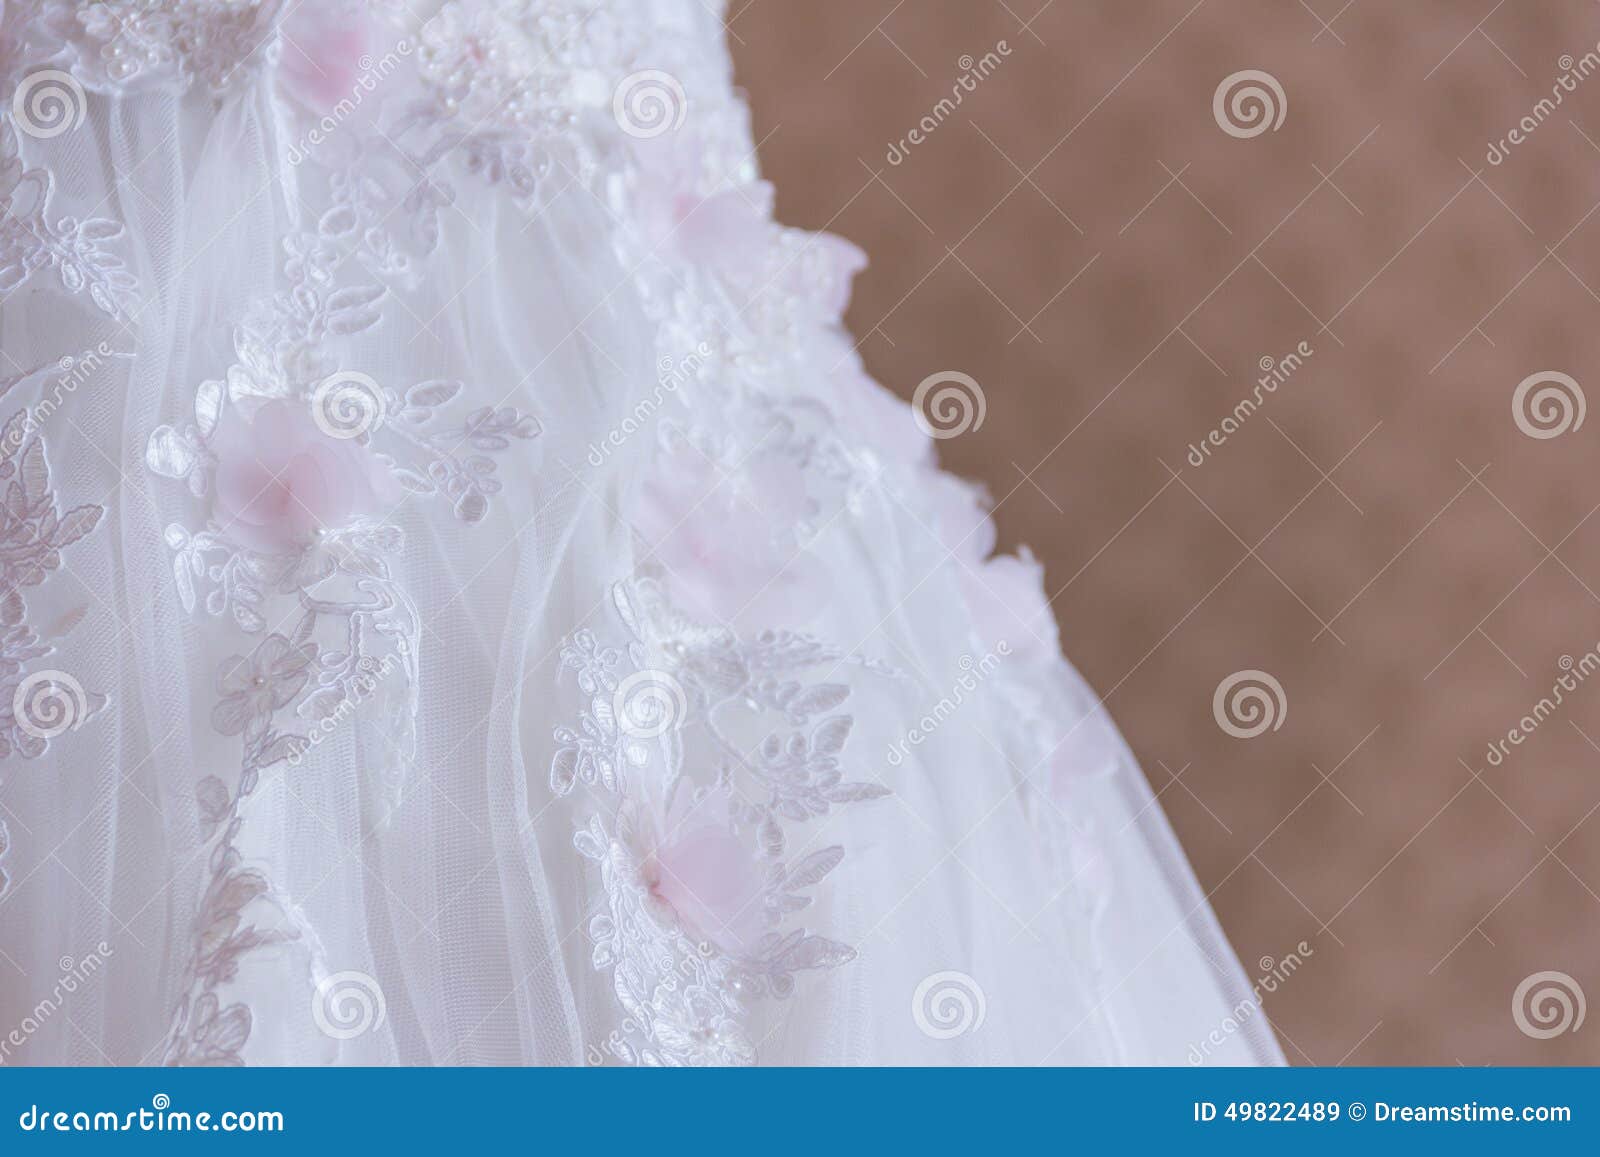 White dress lace stock image. Image of fashion, beauty - 49822489